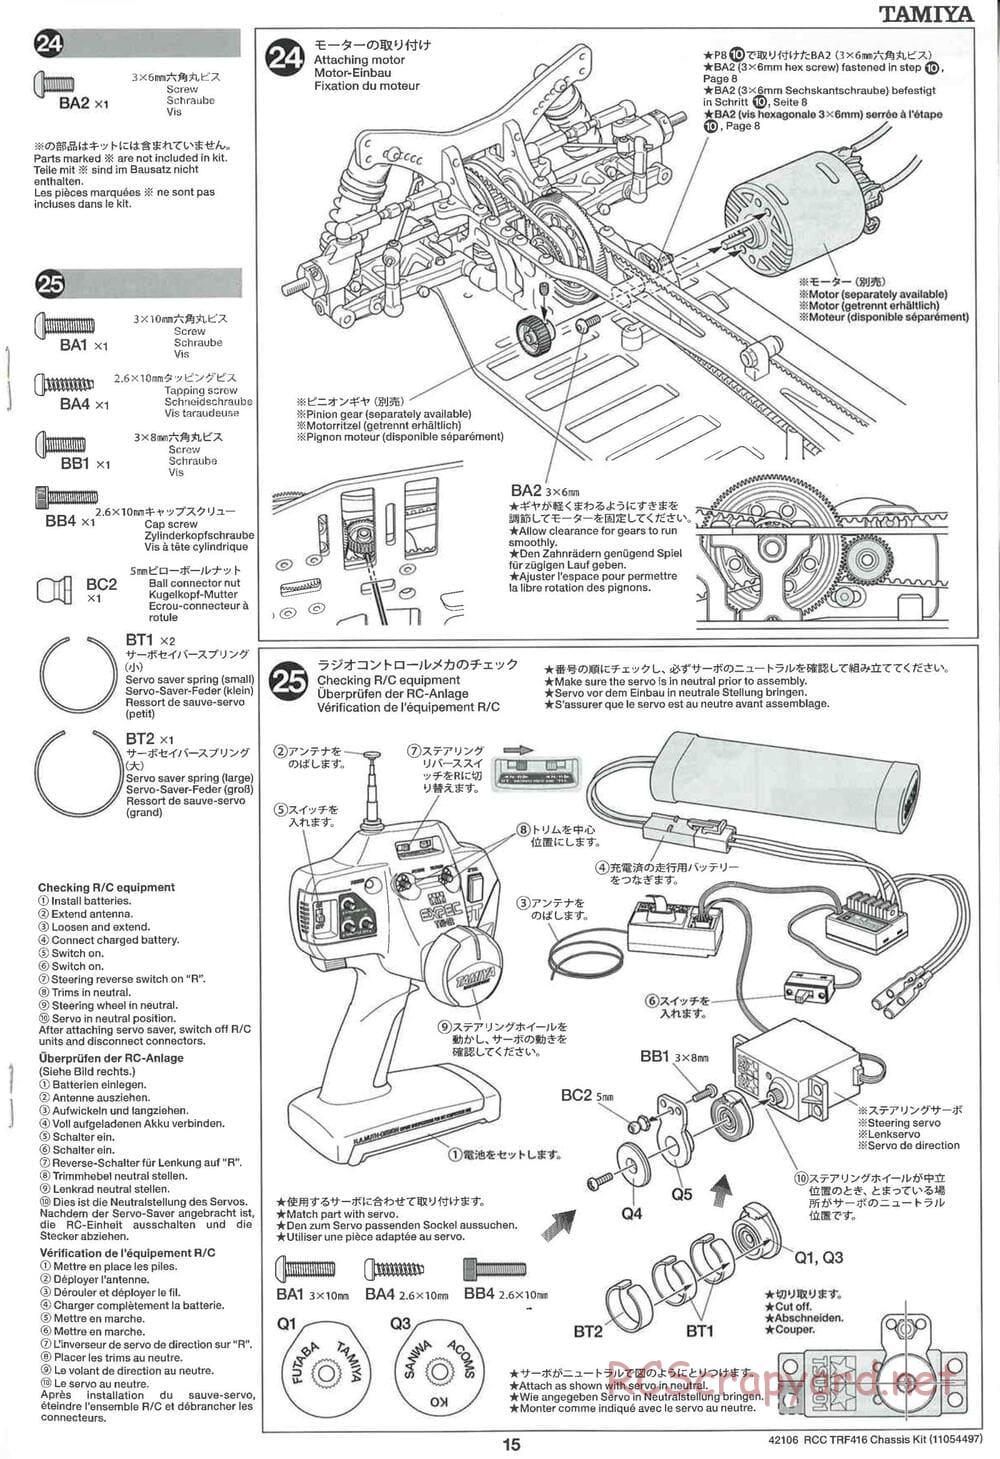 Tamiya - TRF416 Chassis - Manual - Page 15